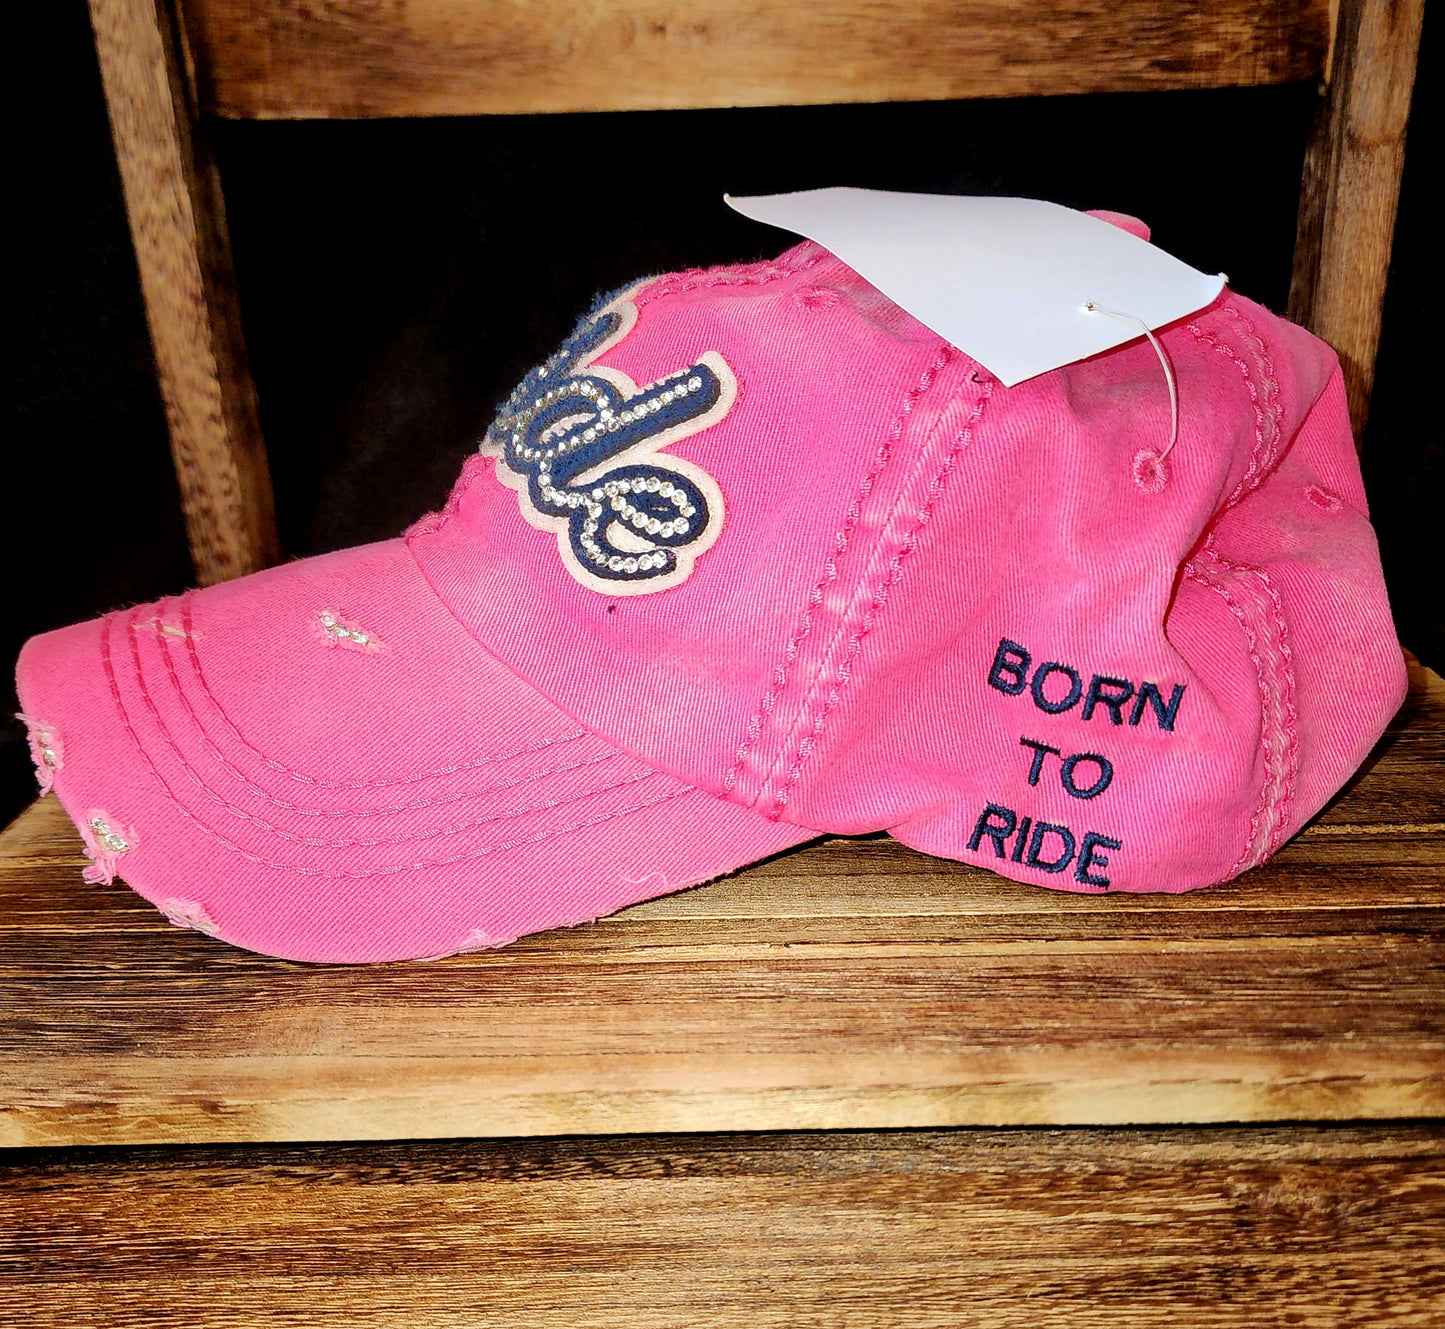 Hot Pink Bling "RIDE" Baseball Cap